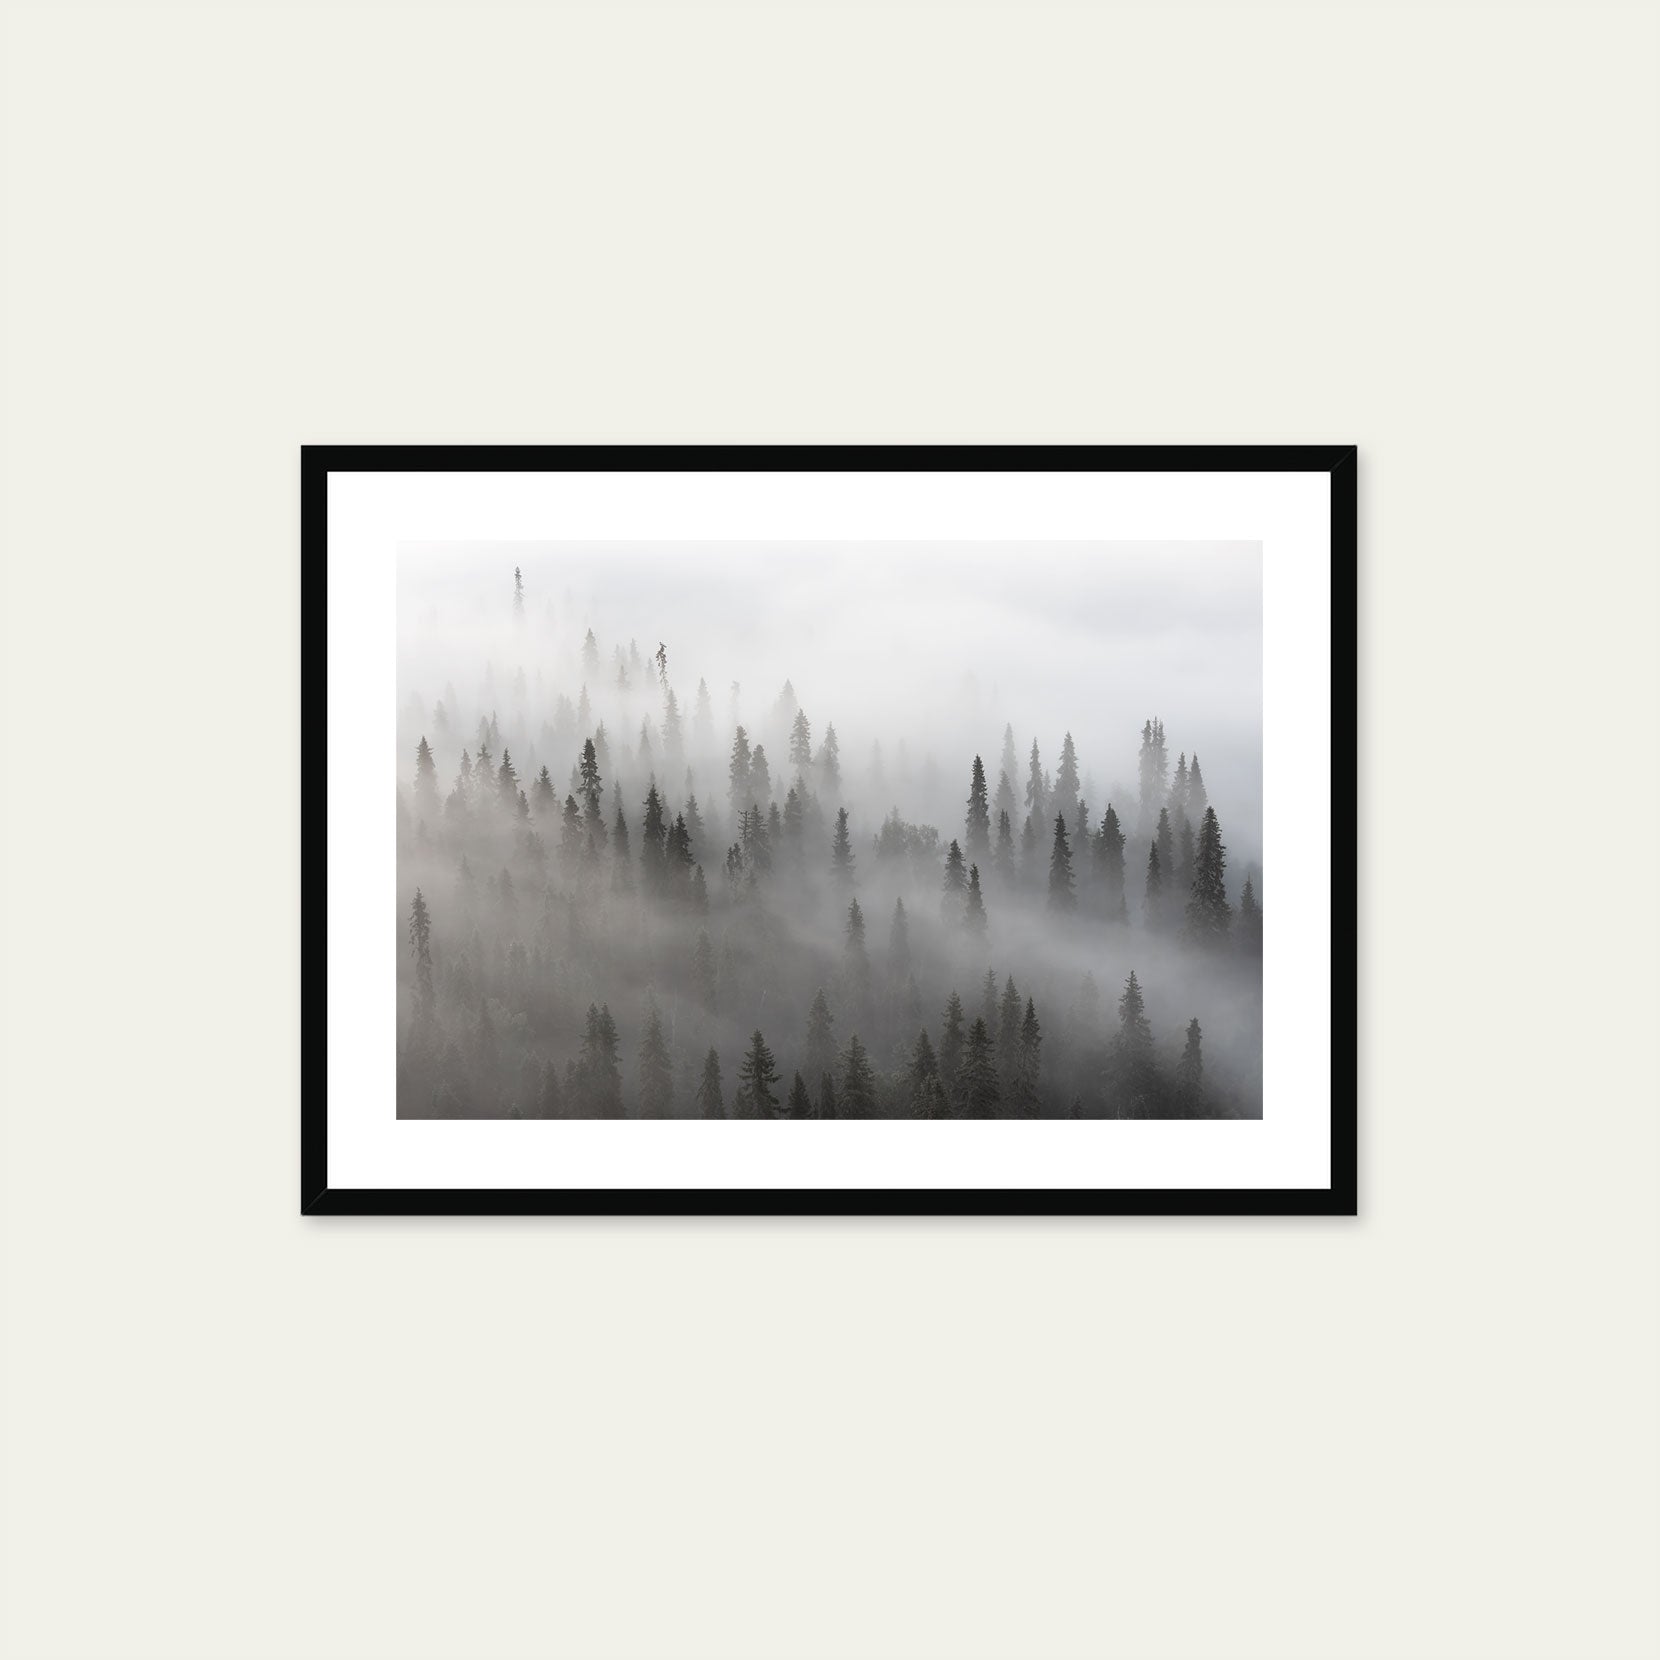 A black framed print of a forest with lingering fog